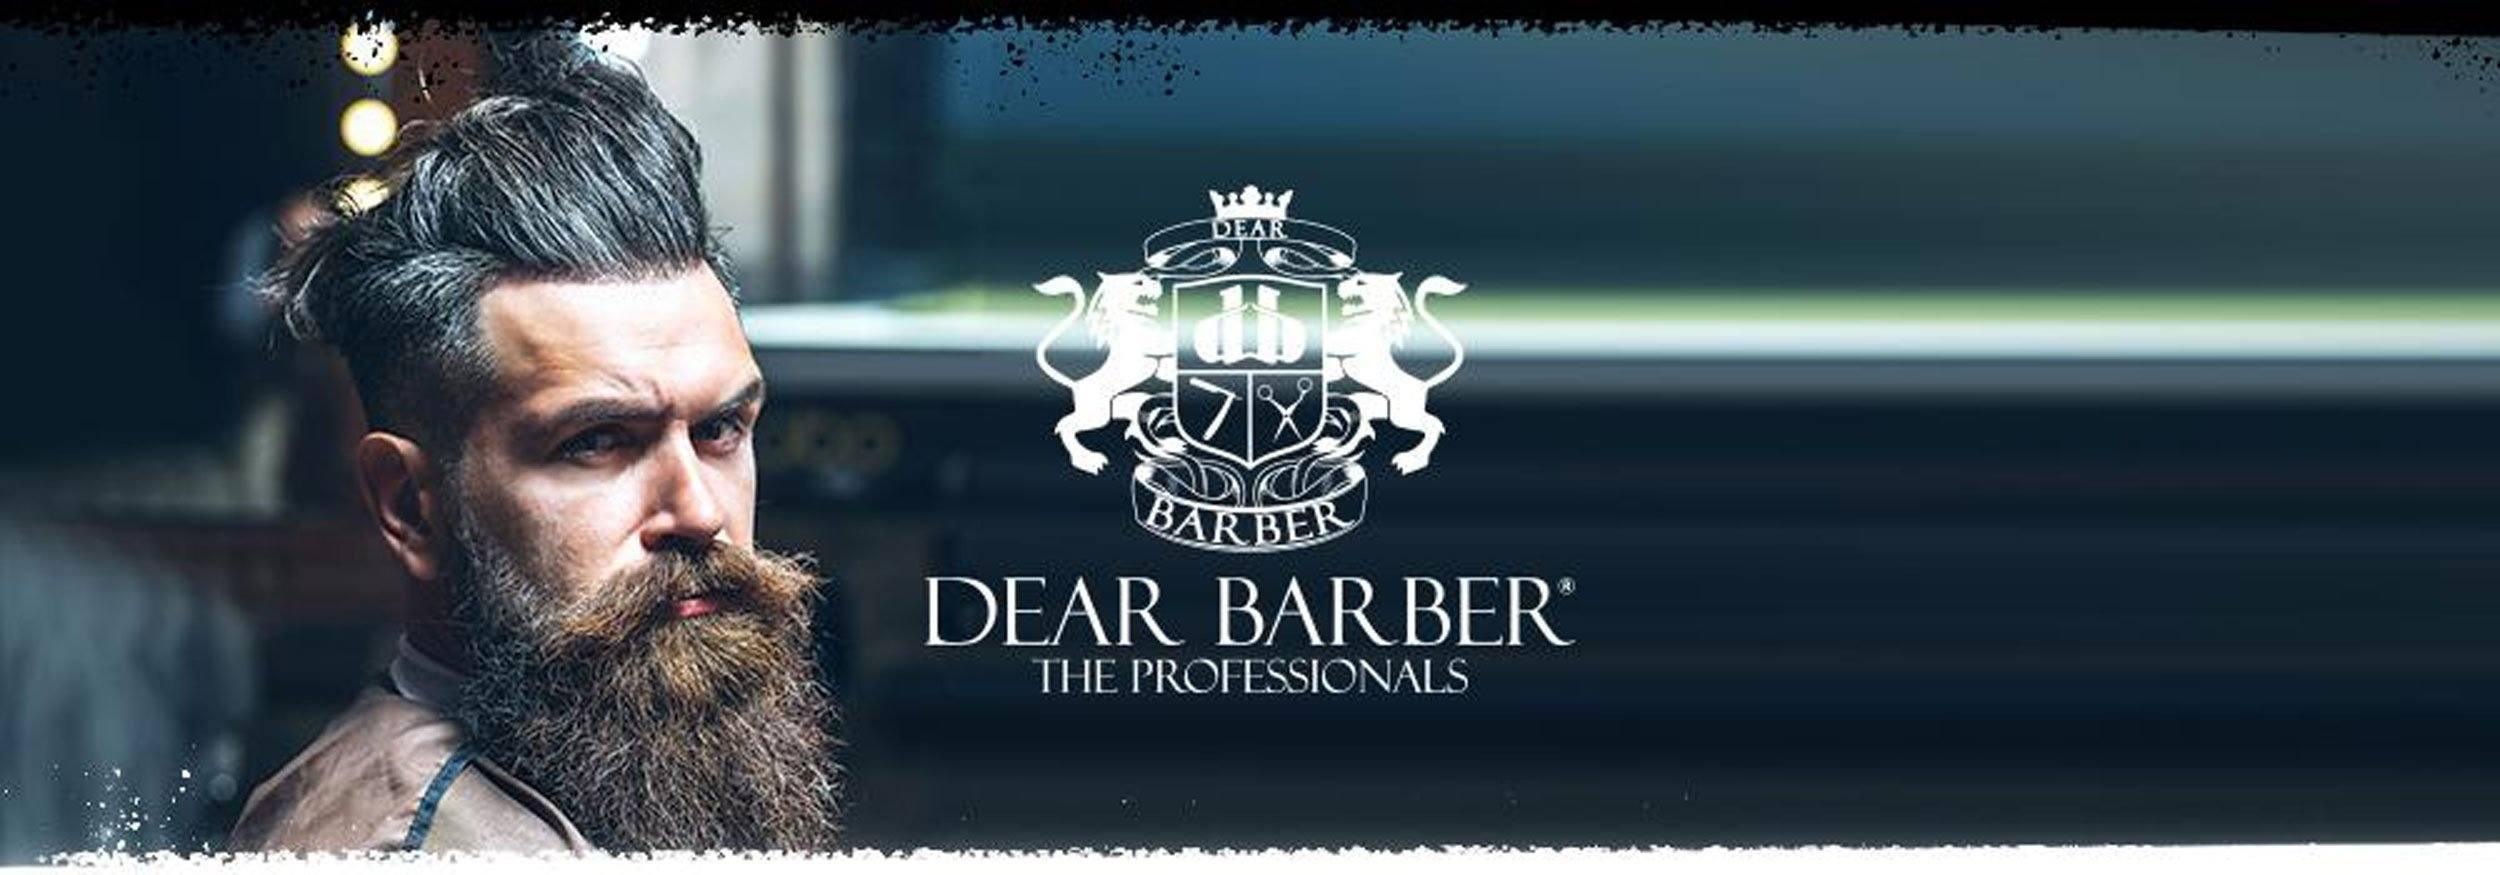 Dear Barber - The Professionals - TacNGear